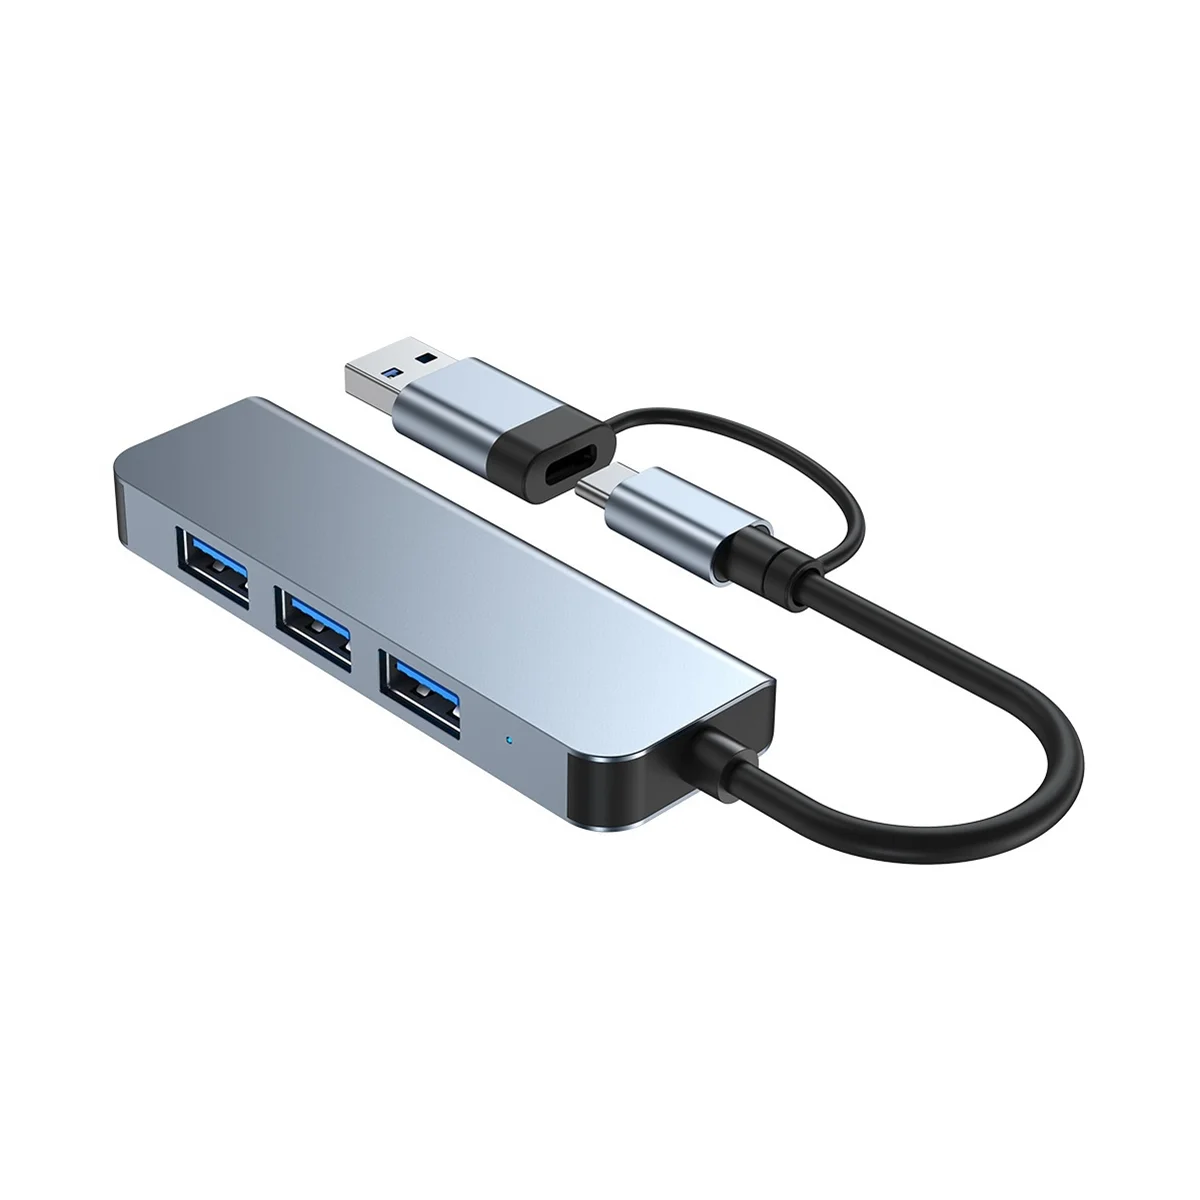 

4 Ports USB 3.0 HUB Type-C Adapter USB 2.0 High Speed Transmission Multi-Port USB Splitter Expander for PC Computer